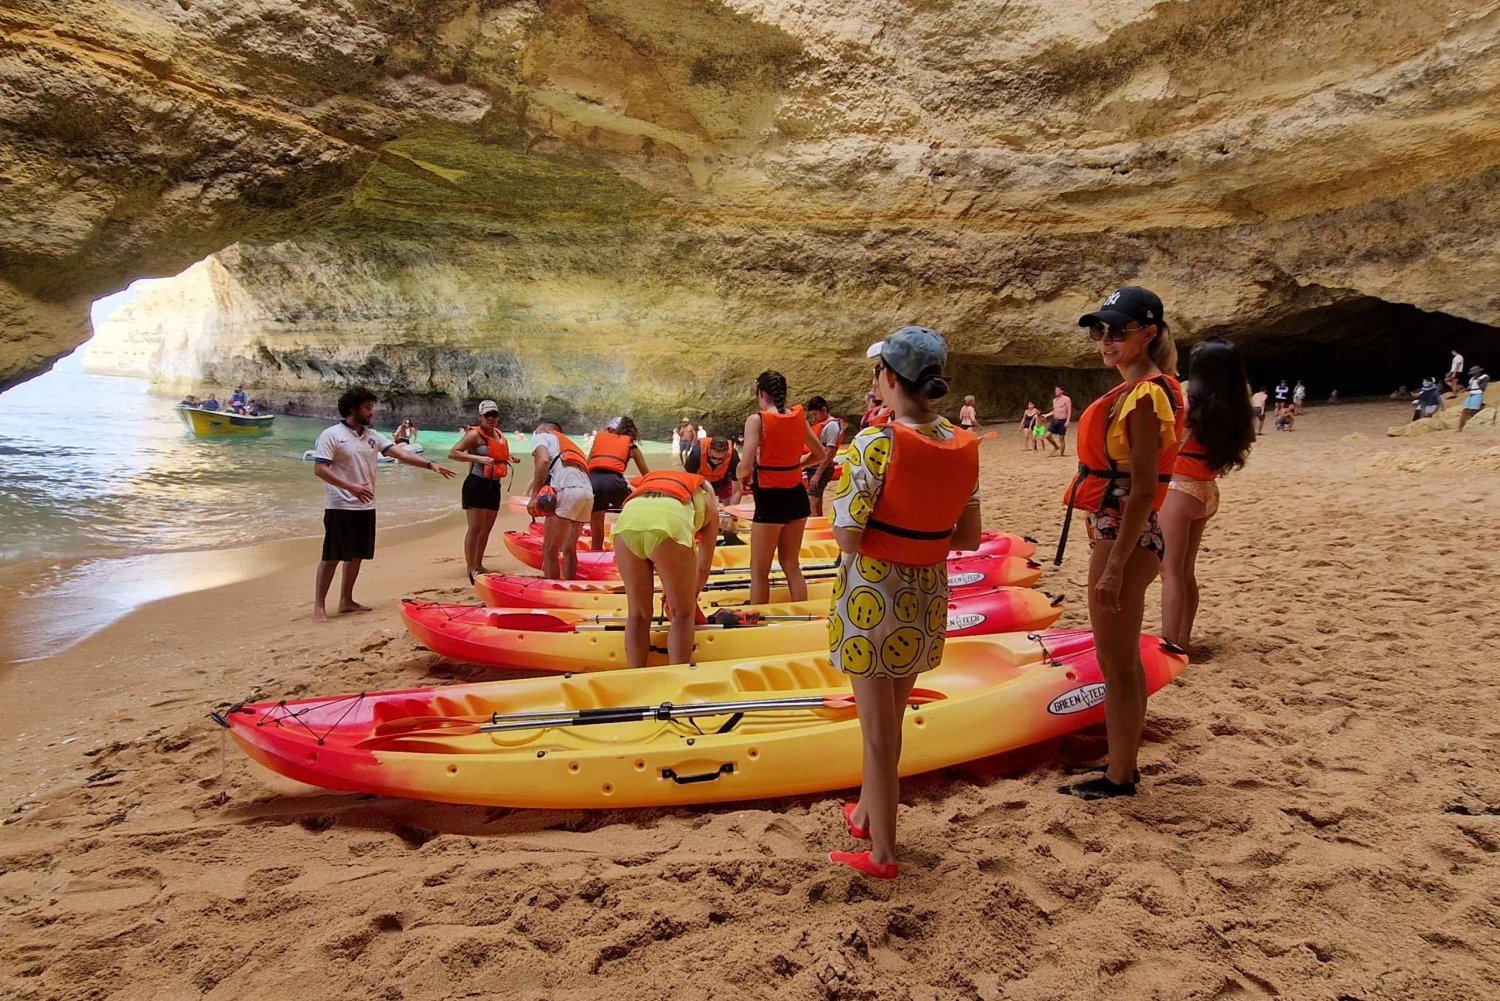 Benagil: Caves, Beaches, and Secret Spots Guided Kayak Tour